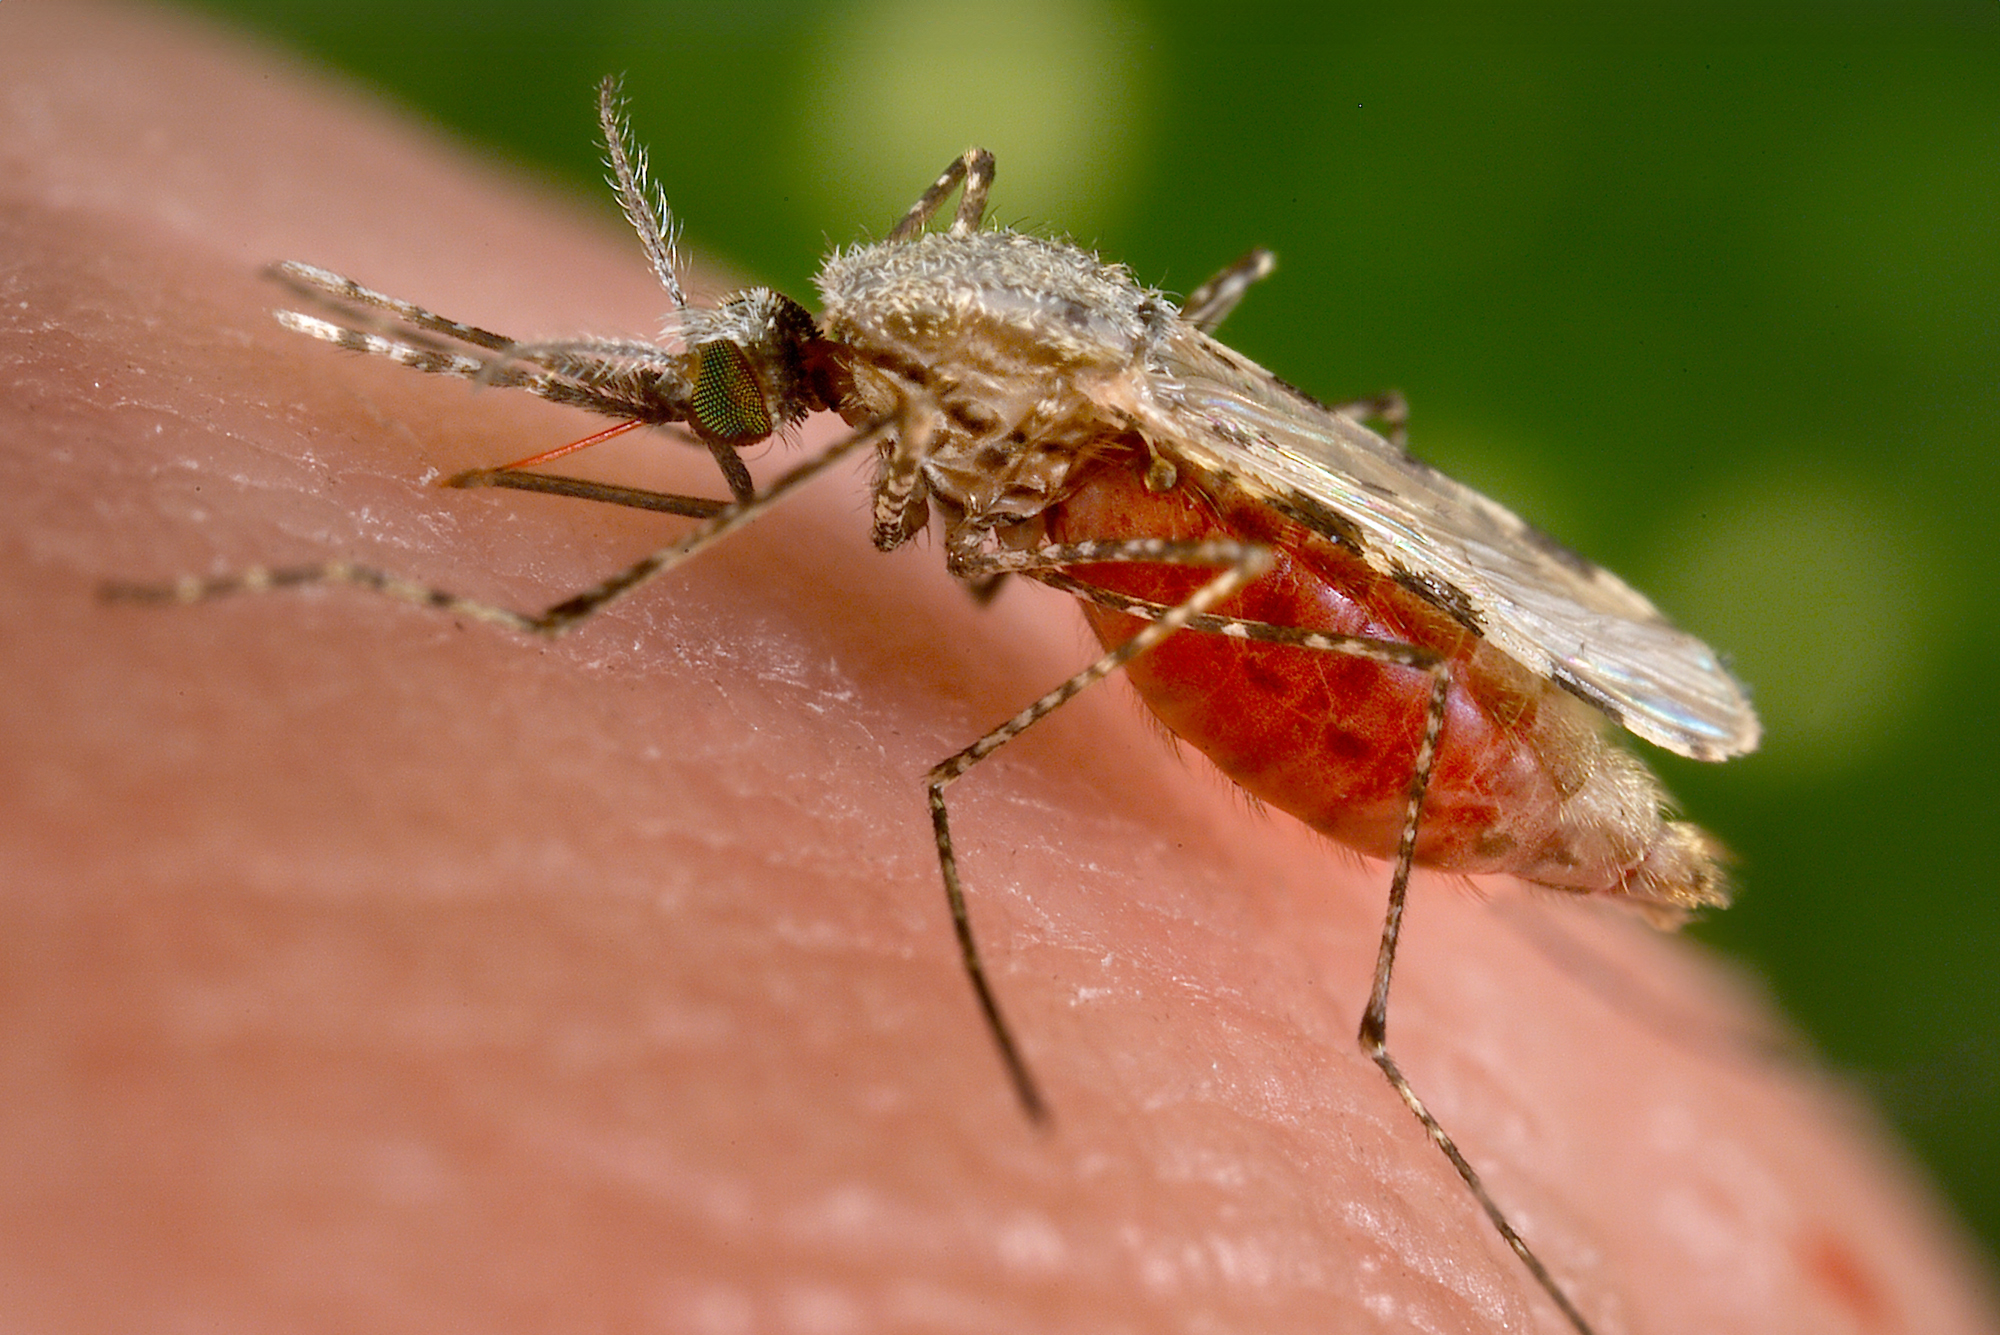 A macro shot of a mosquito (Anopheles stephensi) sucking blood through its proboscis